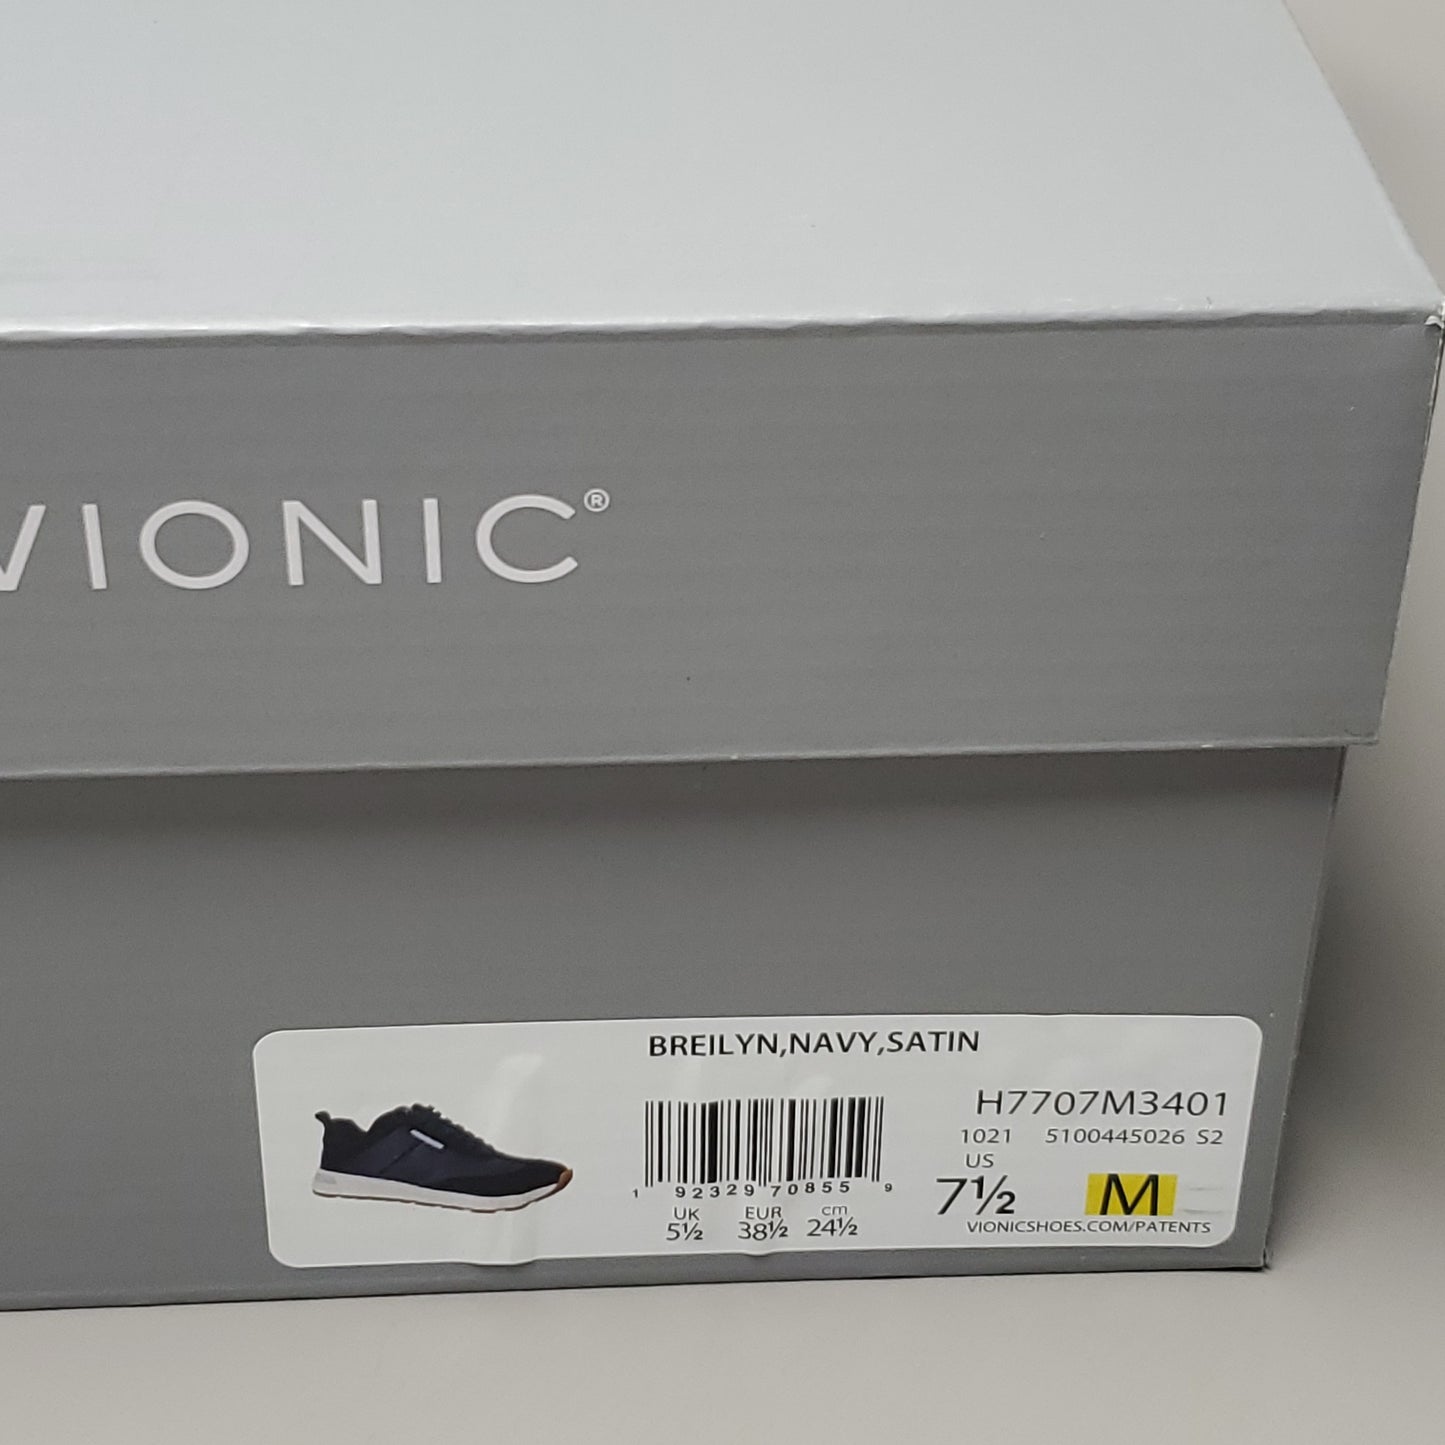 VIONIC Breilyn Satin Sneaker Shoe Women's Sz 7.5 M Navy/White (New)